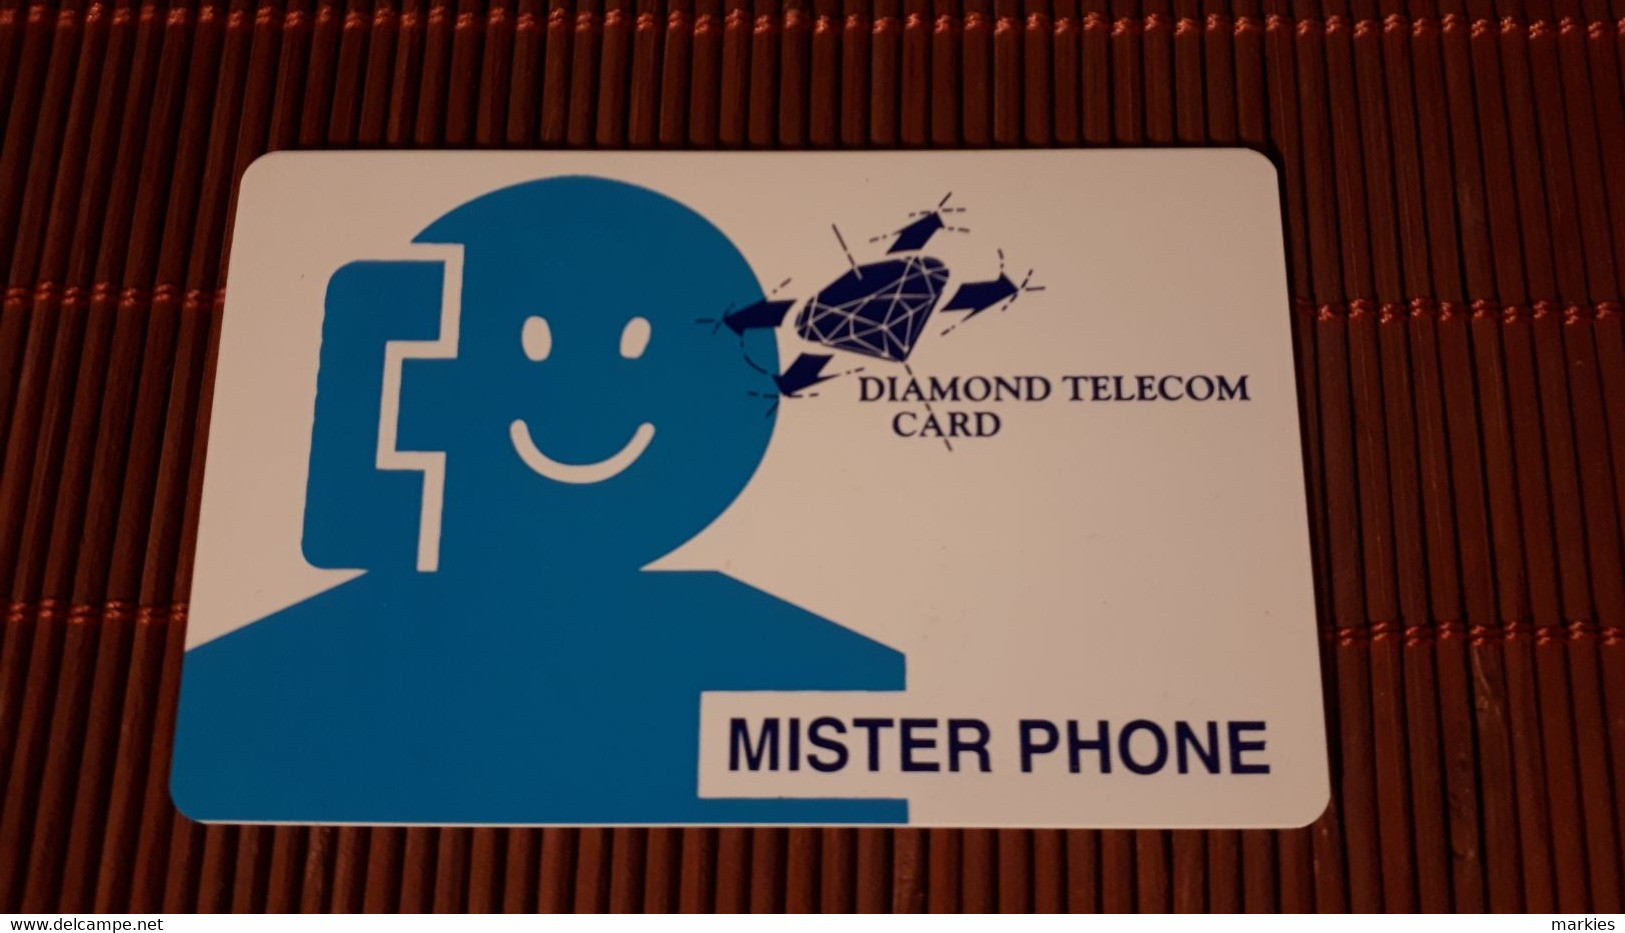 Diamond Telecom 1 Prepaidcard Mister Phone (Mint,New) Expiry Dat 31-1-97  Rare - Herkunft Unbekannt